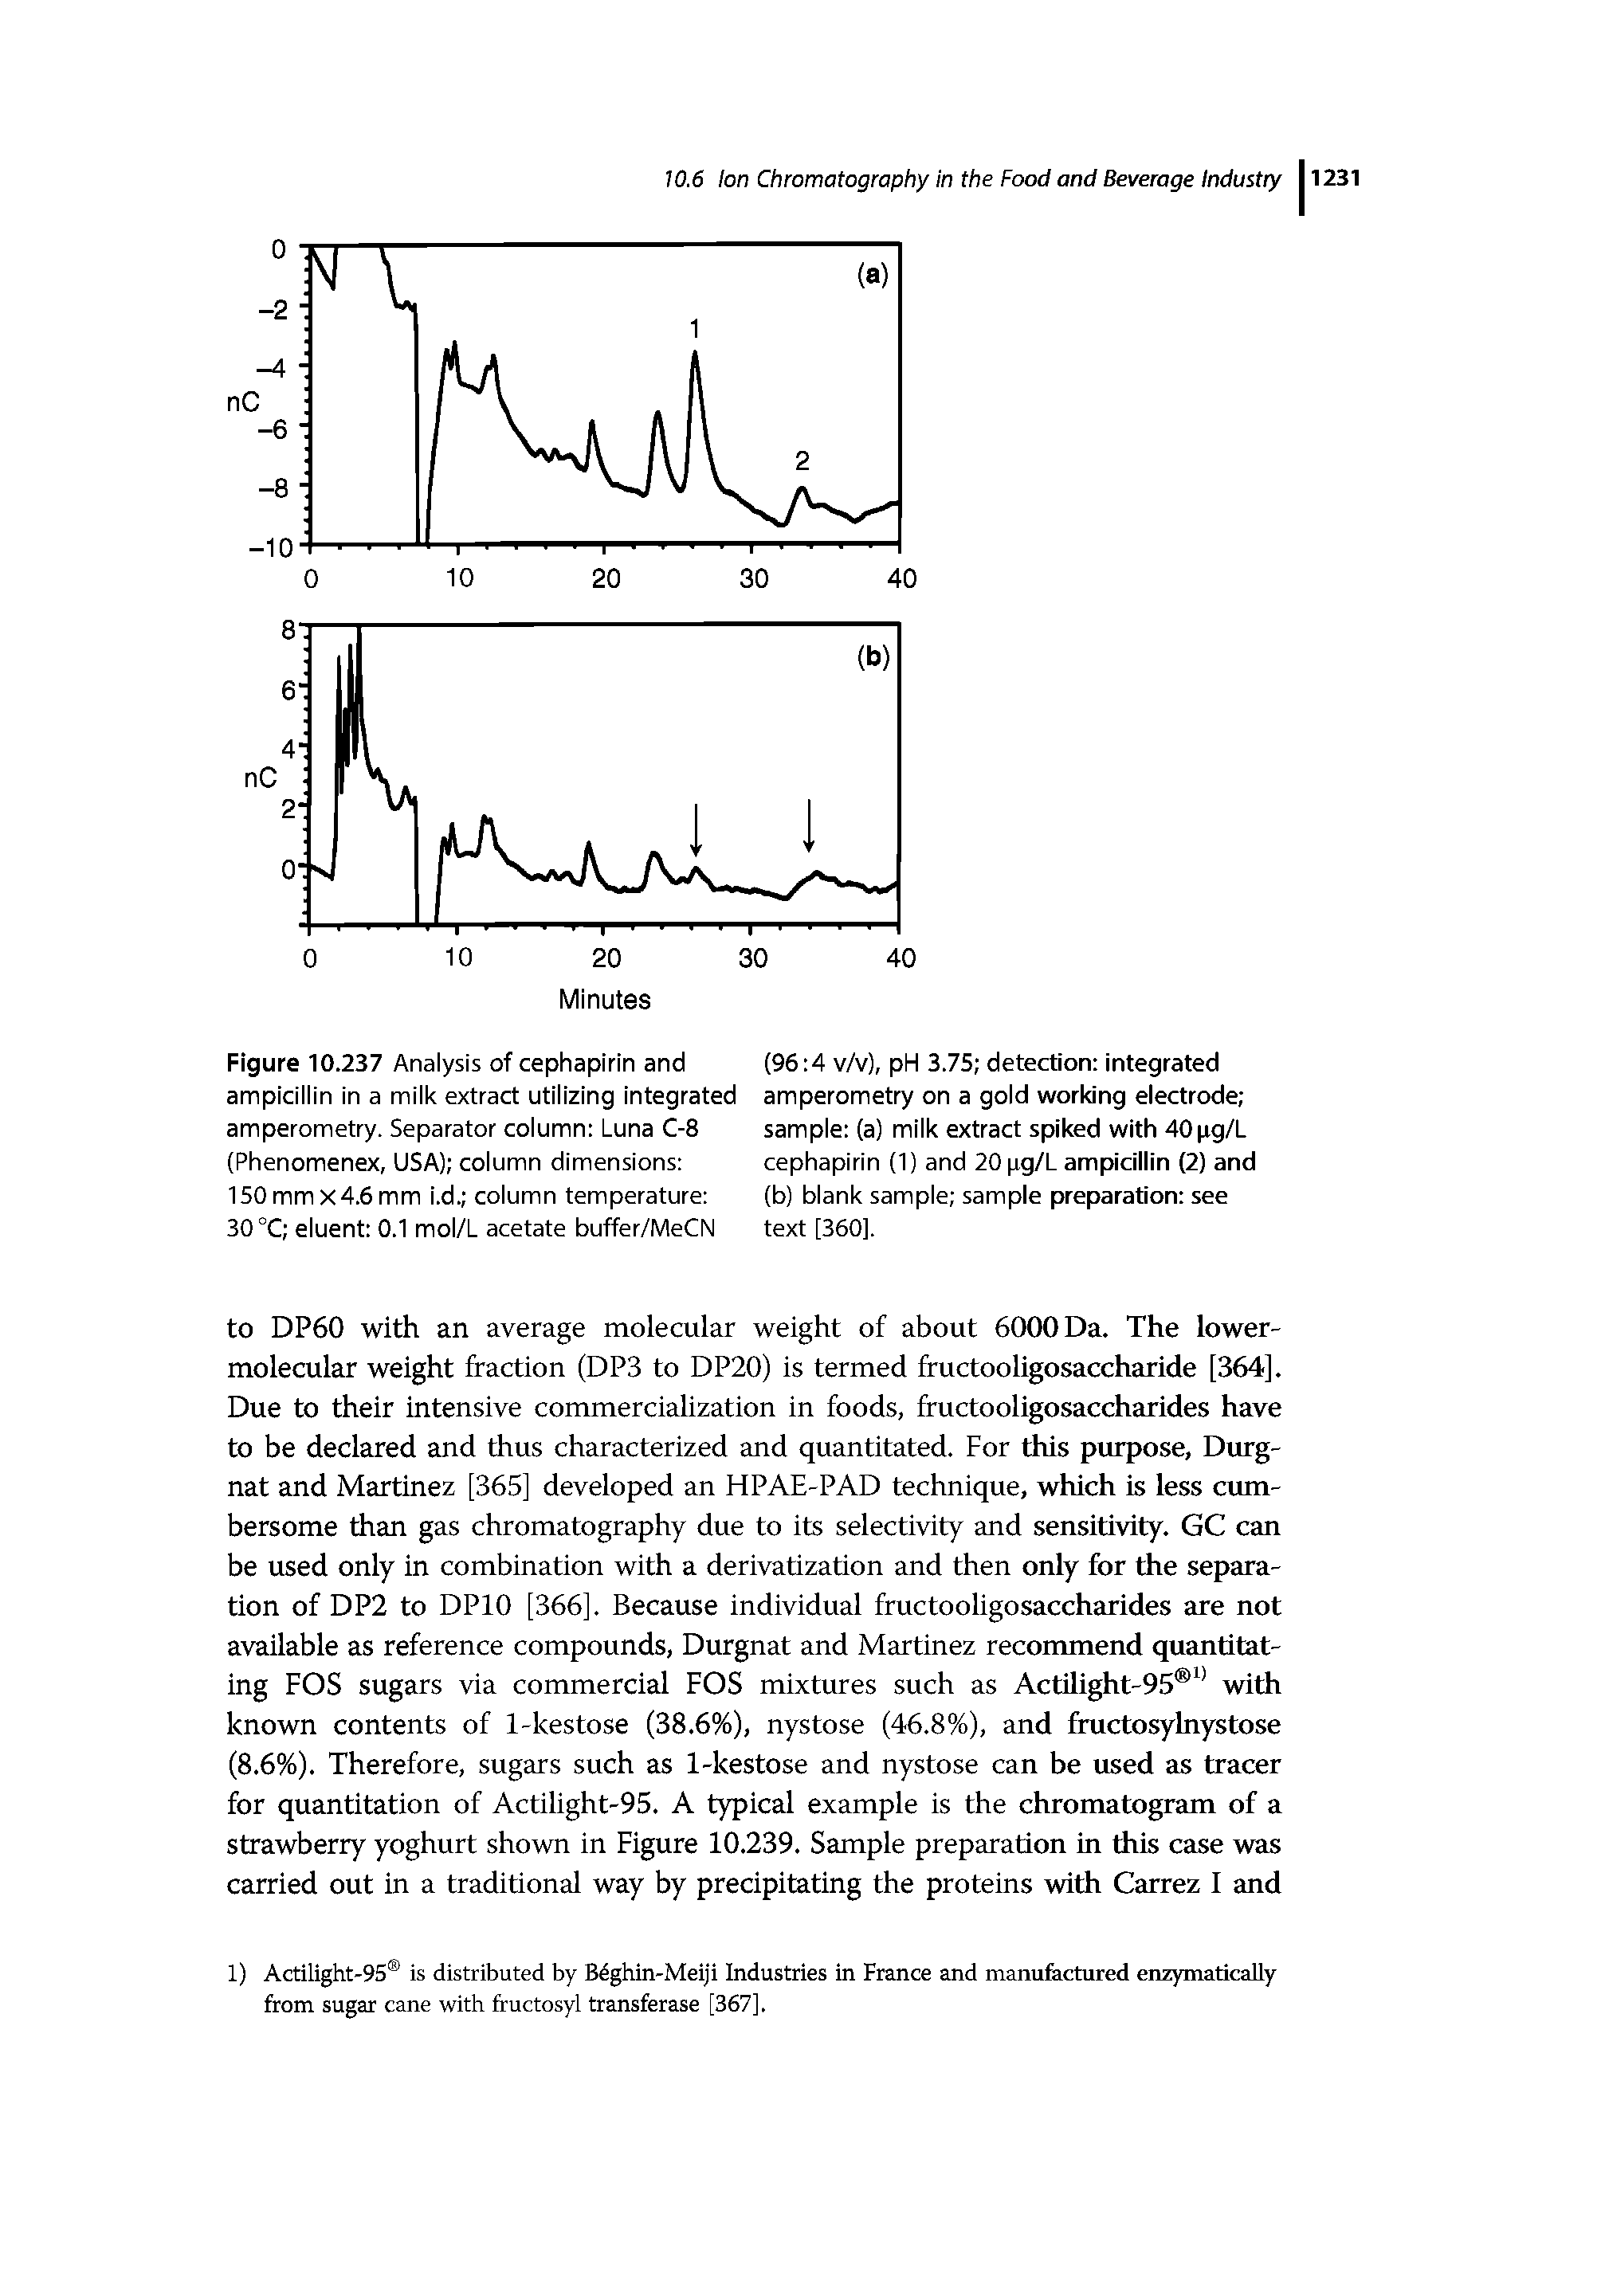 Figure 10.237 Analysis of cephapirin and ampicillin in a milk extract utilizing integrated amperometry. Separator column Luna C-8 (Phenomenex, USA) column dimensions ...